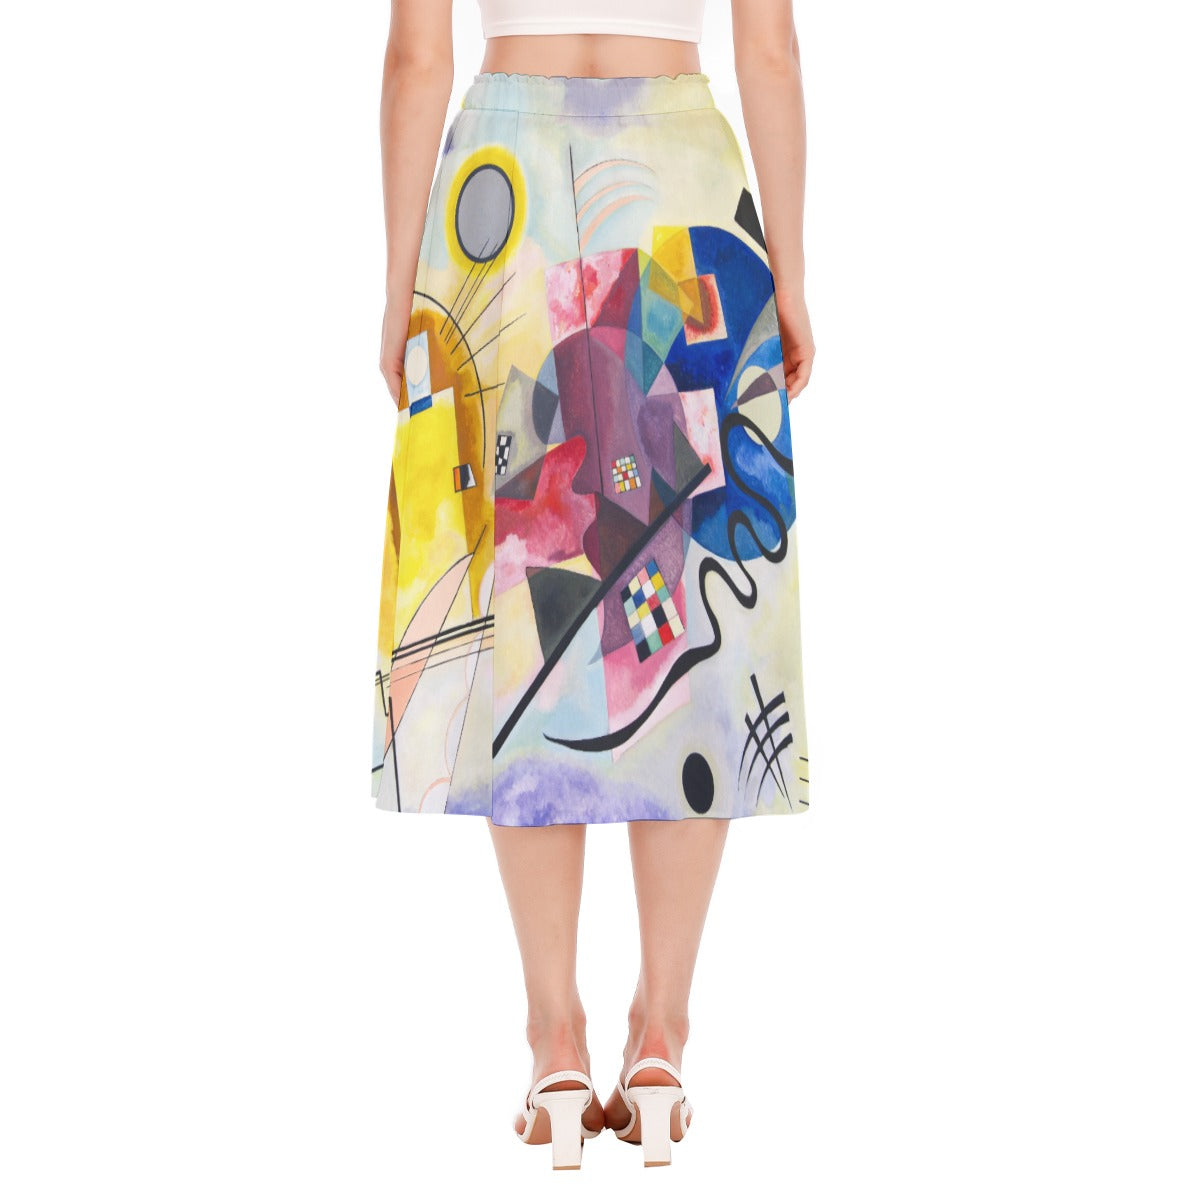 Colorful Kandinsky-inspired fashion